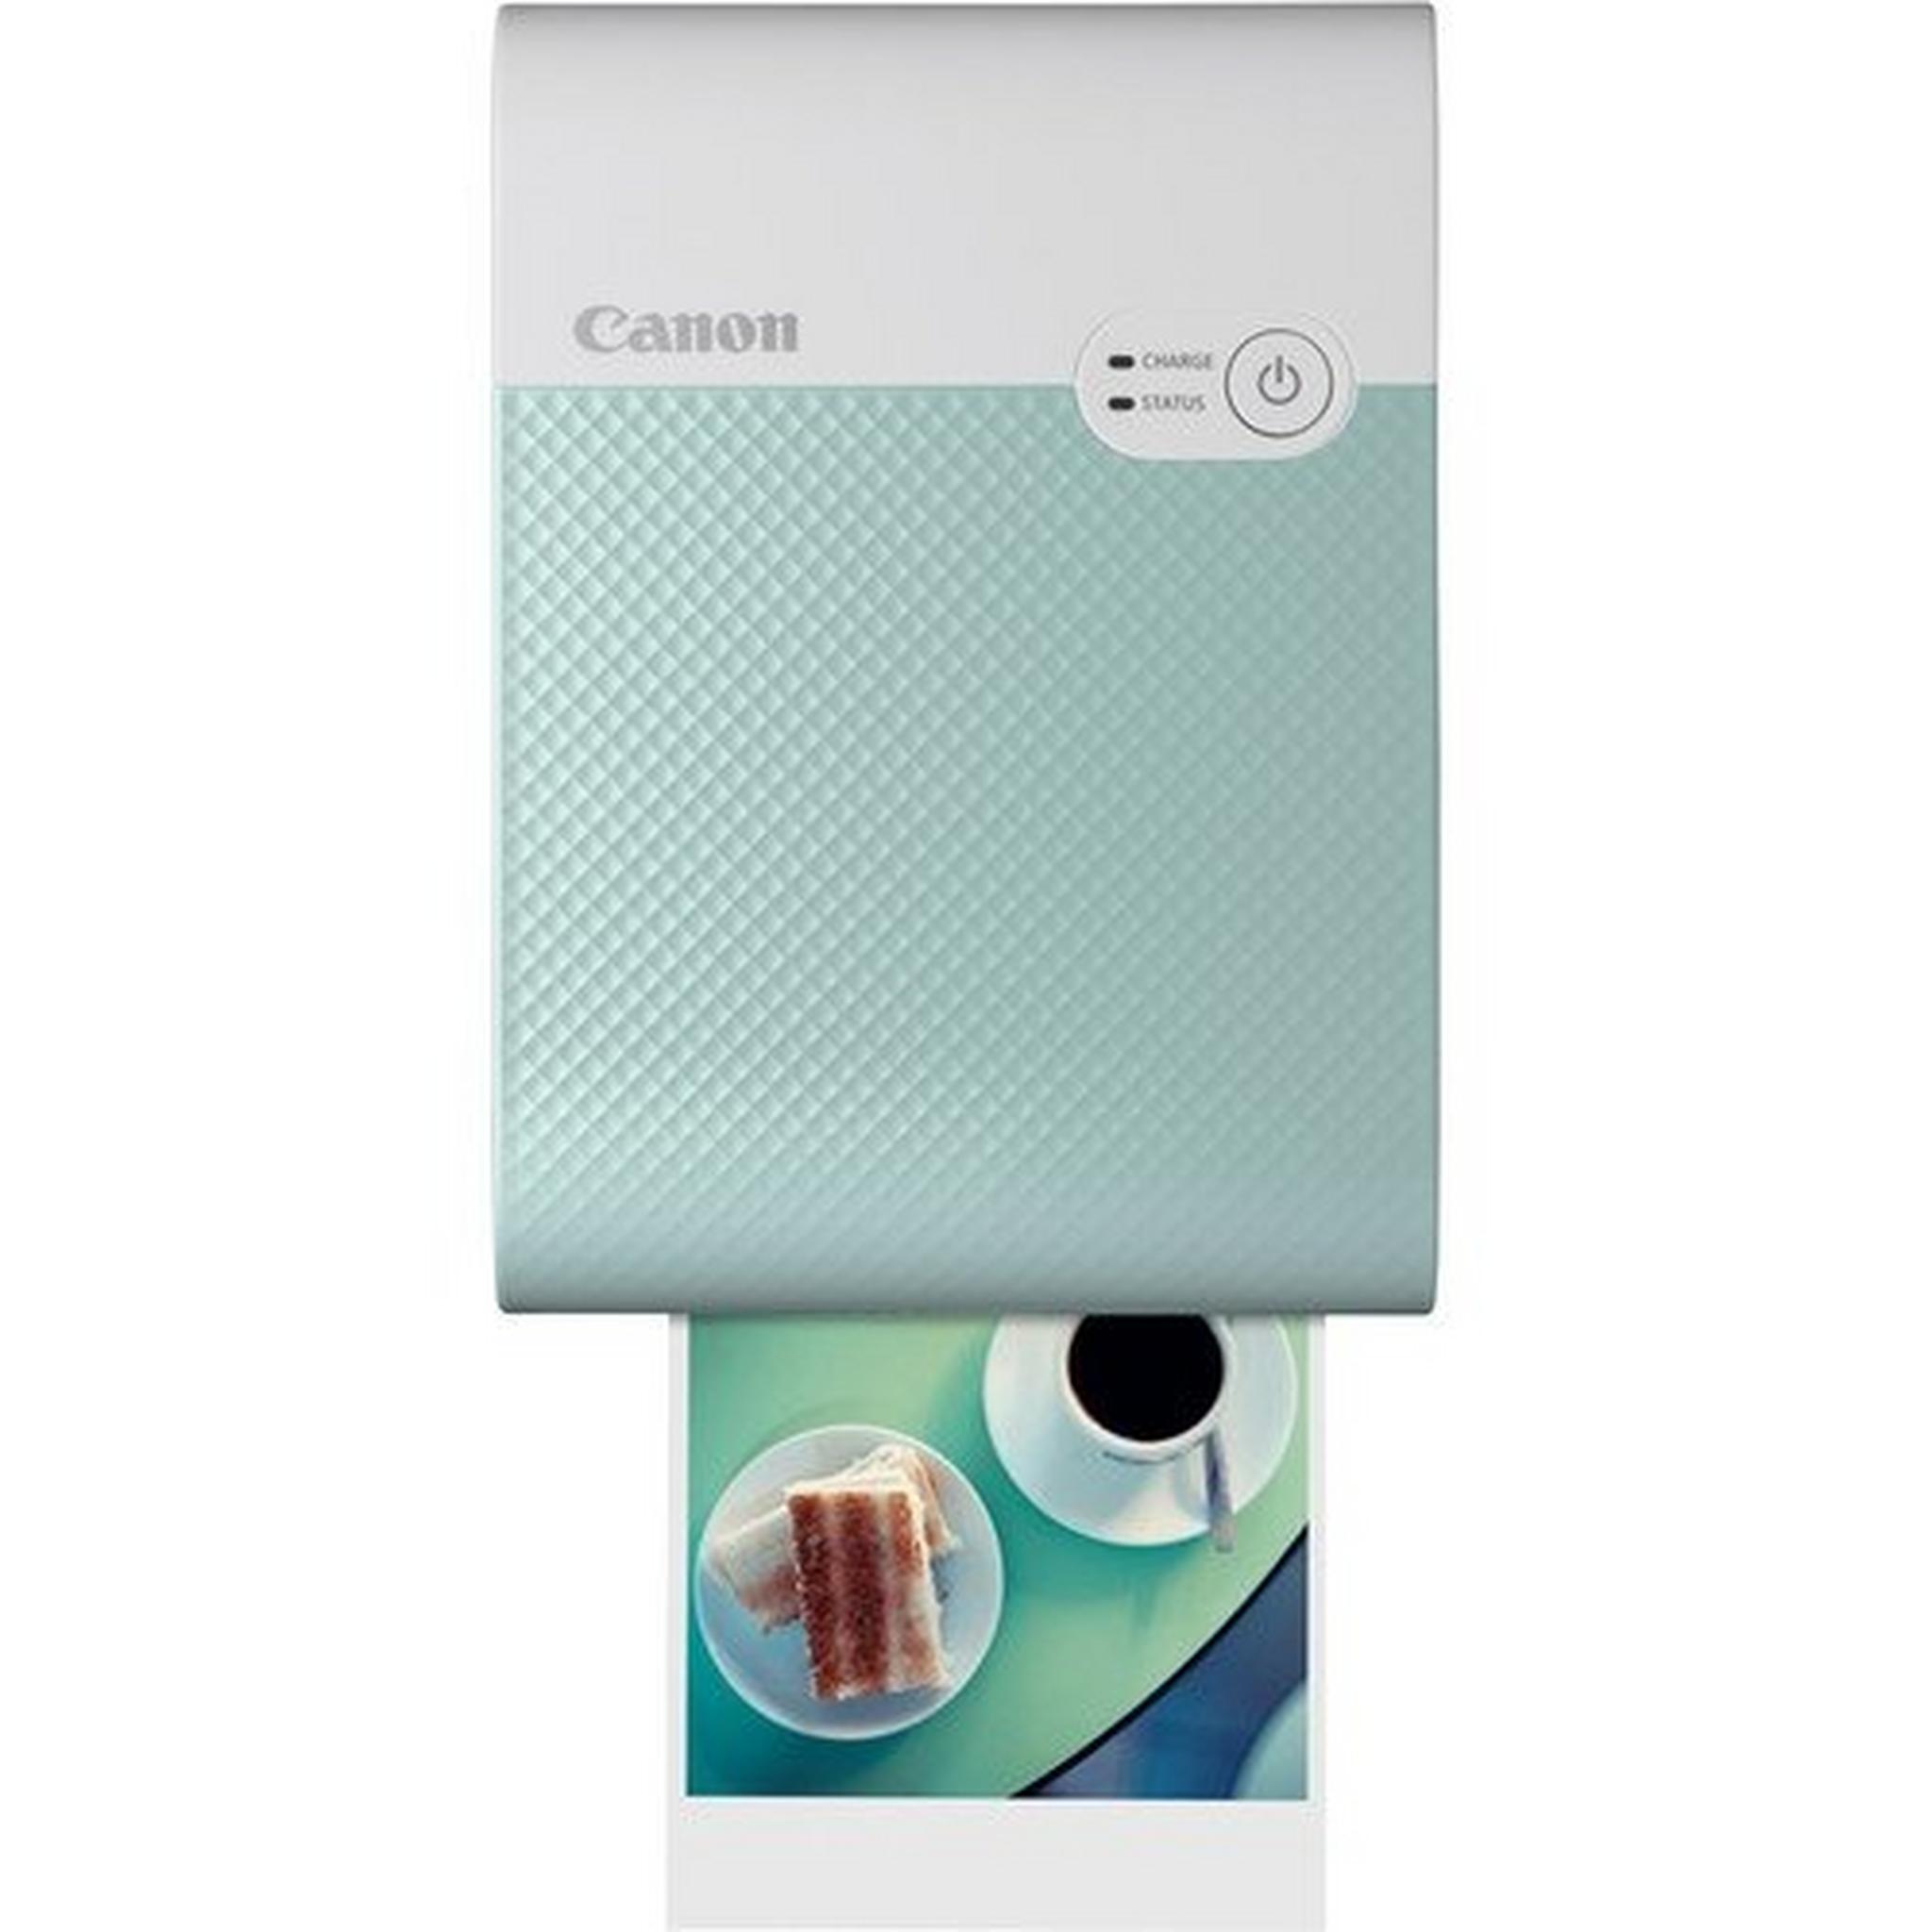 Canon Selphy Square QX10 Compact Photo Printer - Green